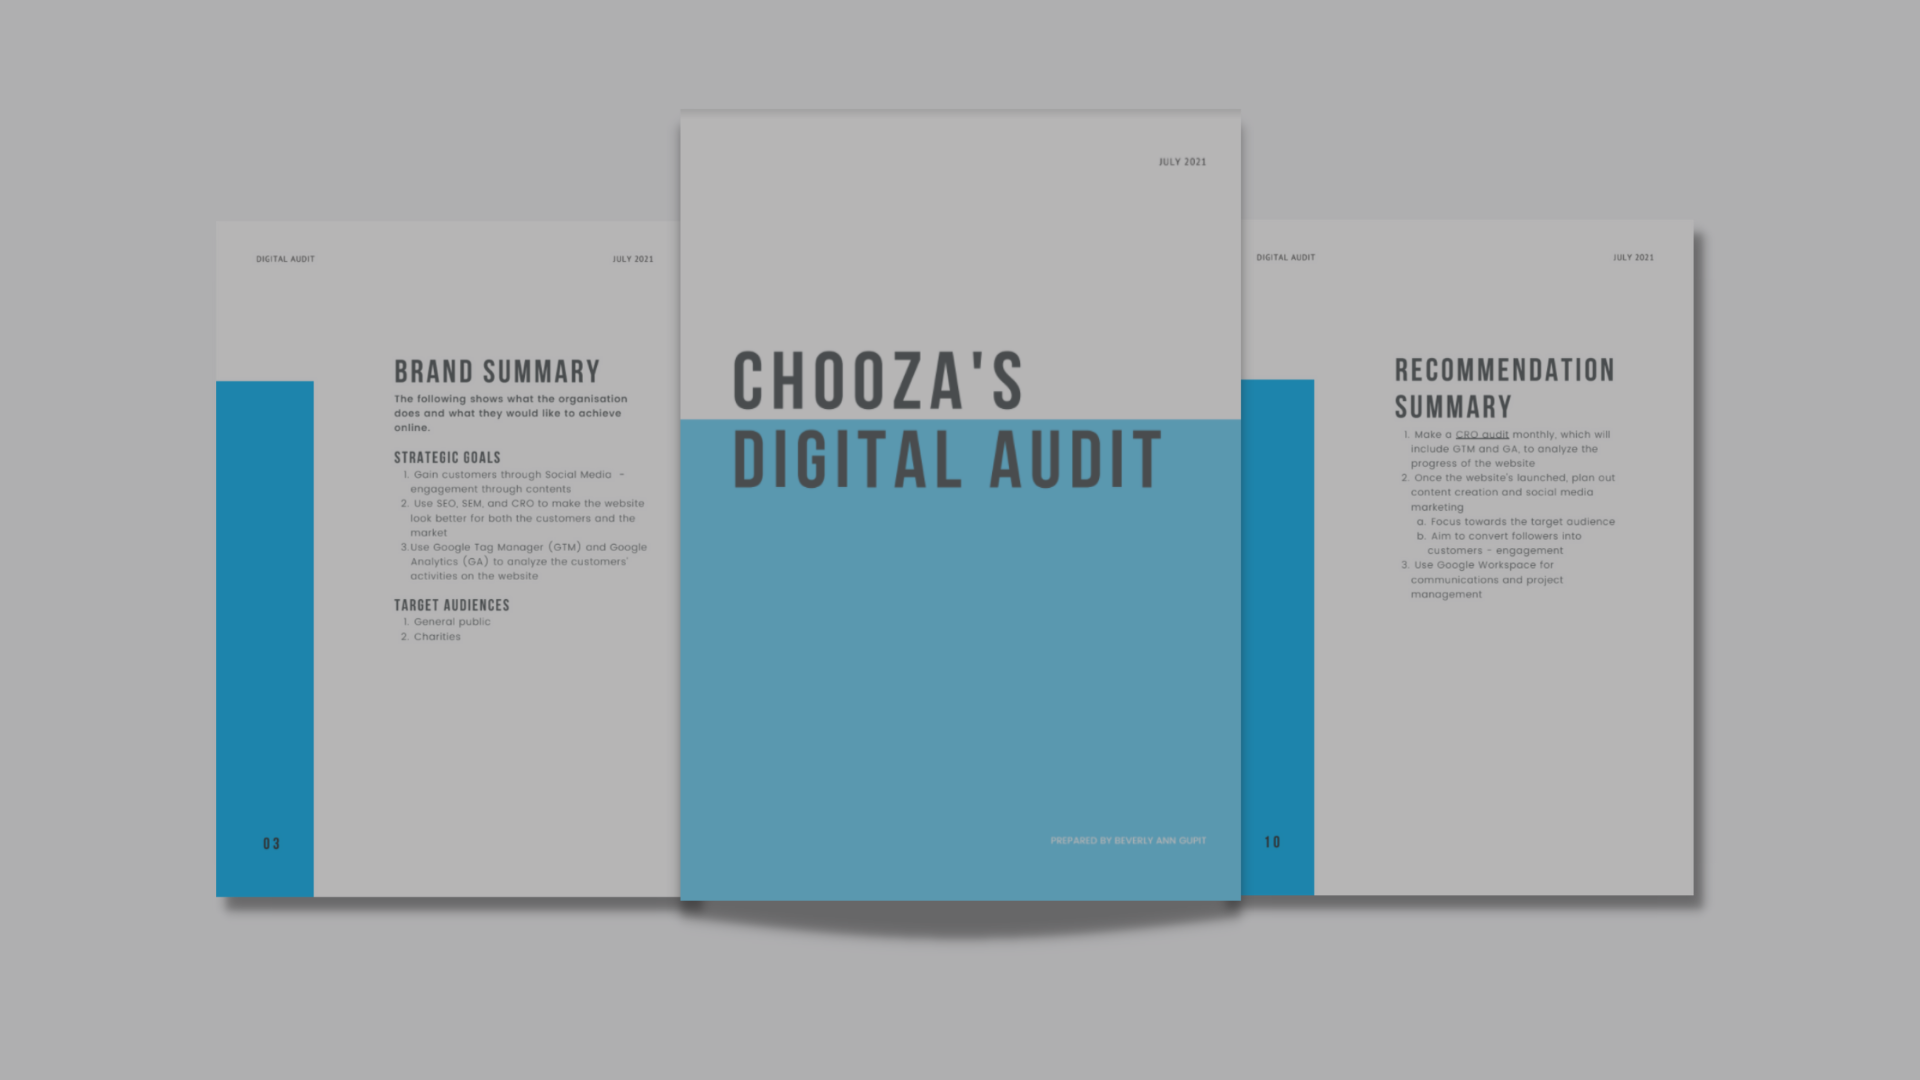 Chooza's digital audit